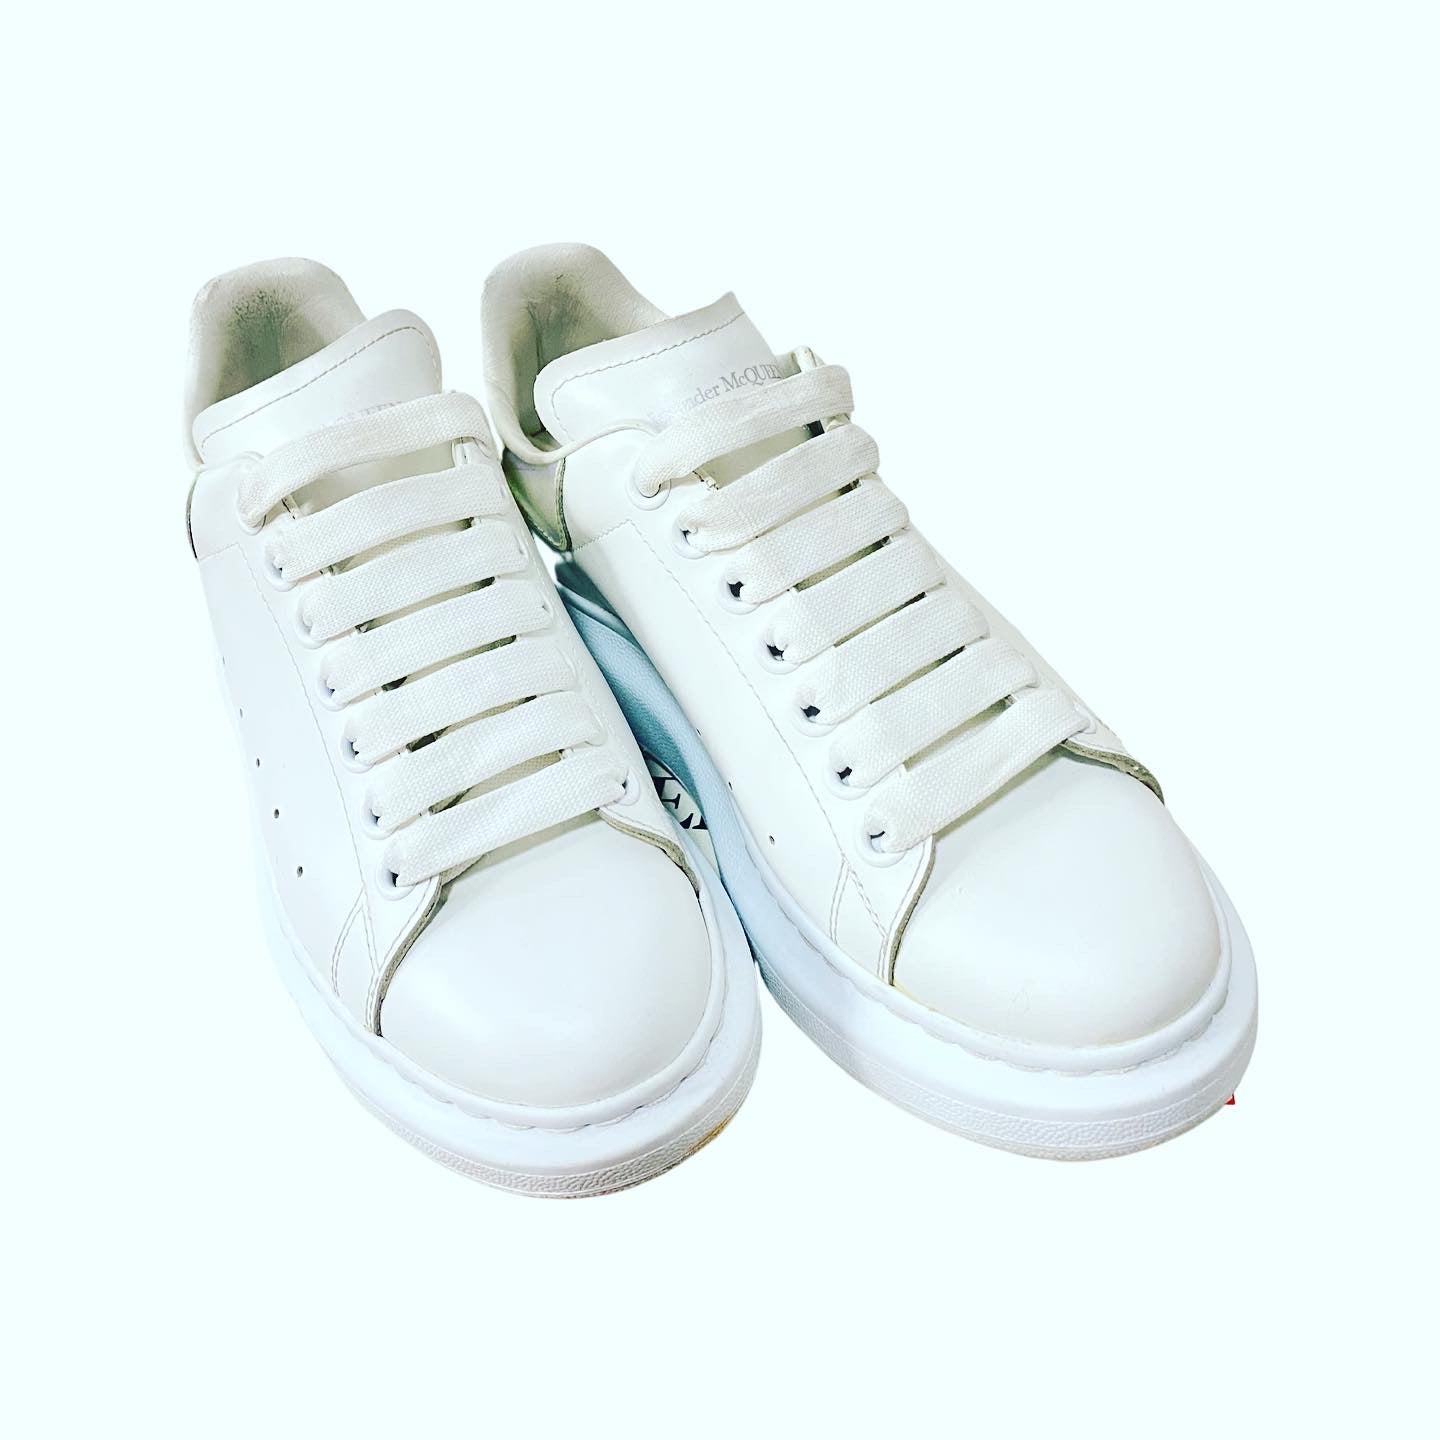 Alexander McQueen Hologram Sneakers in White/Silver | MTYCI